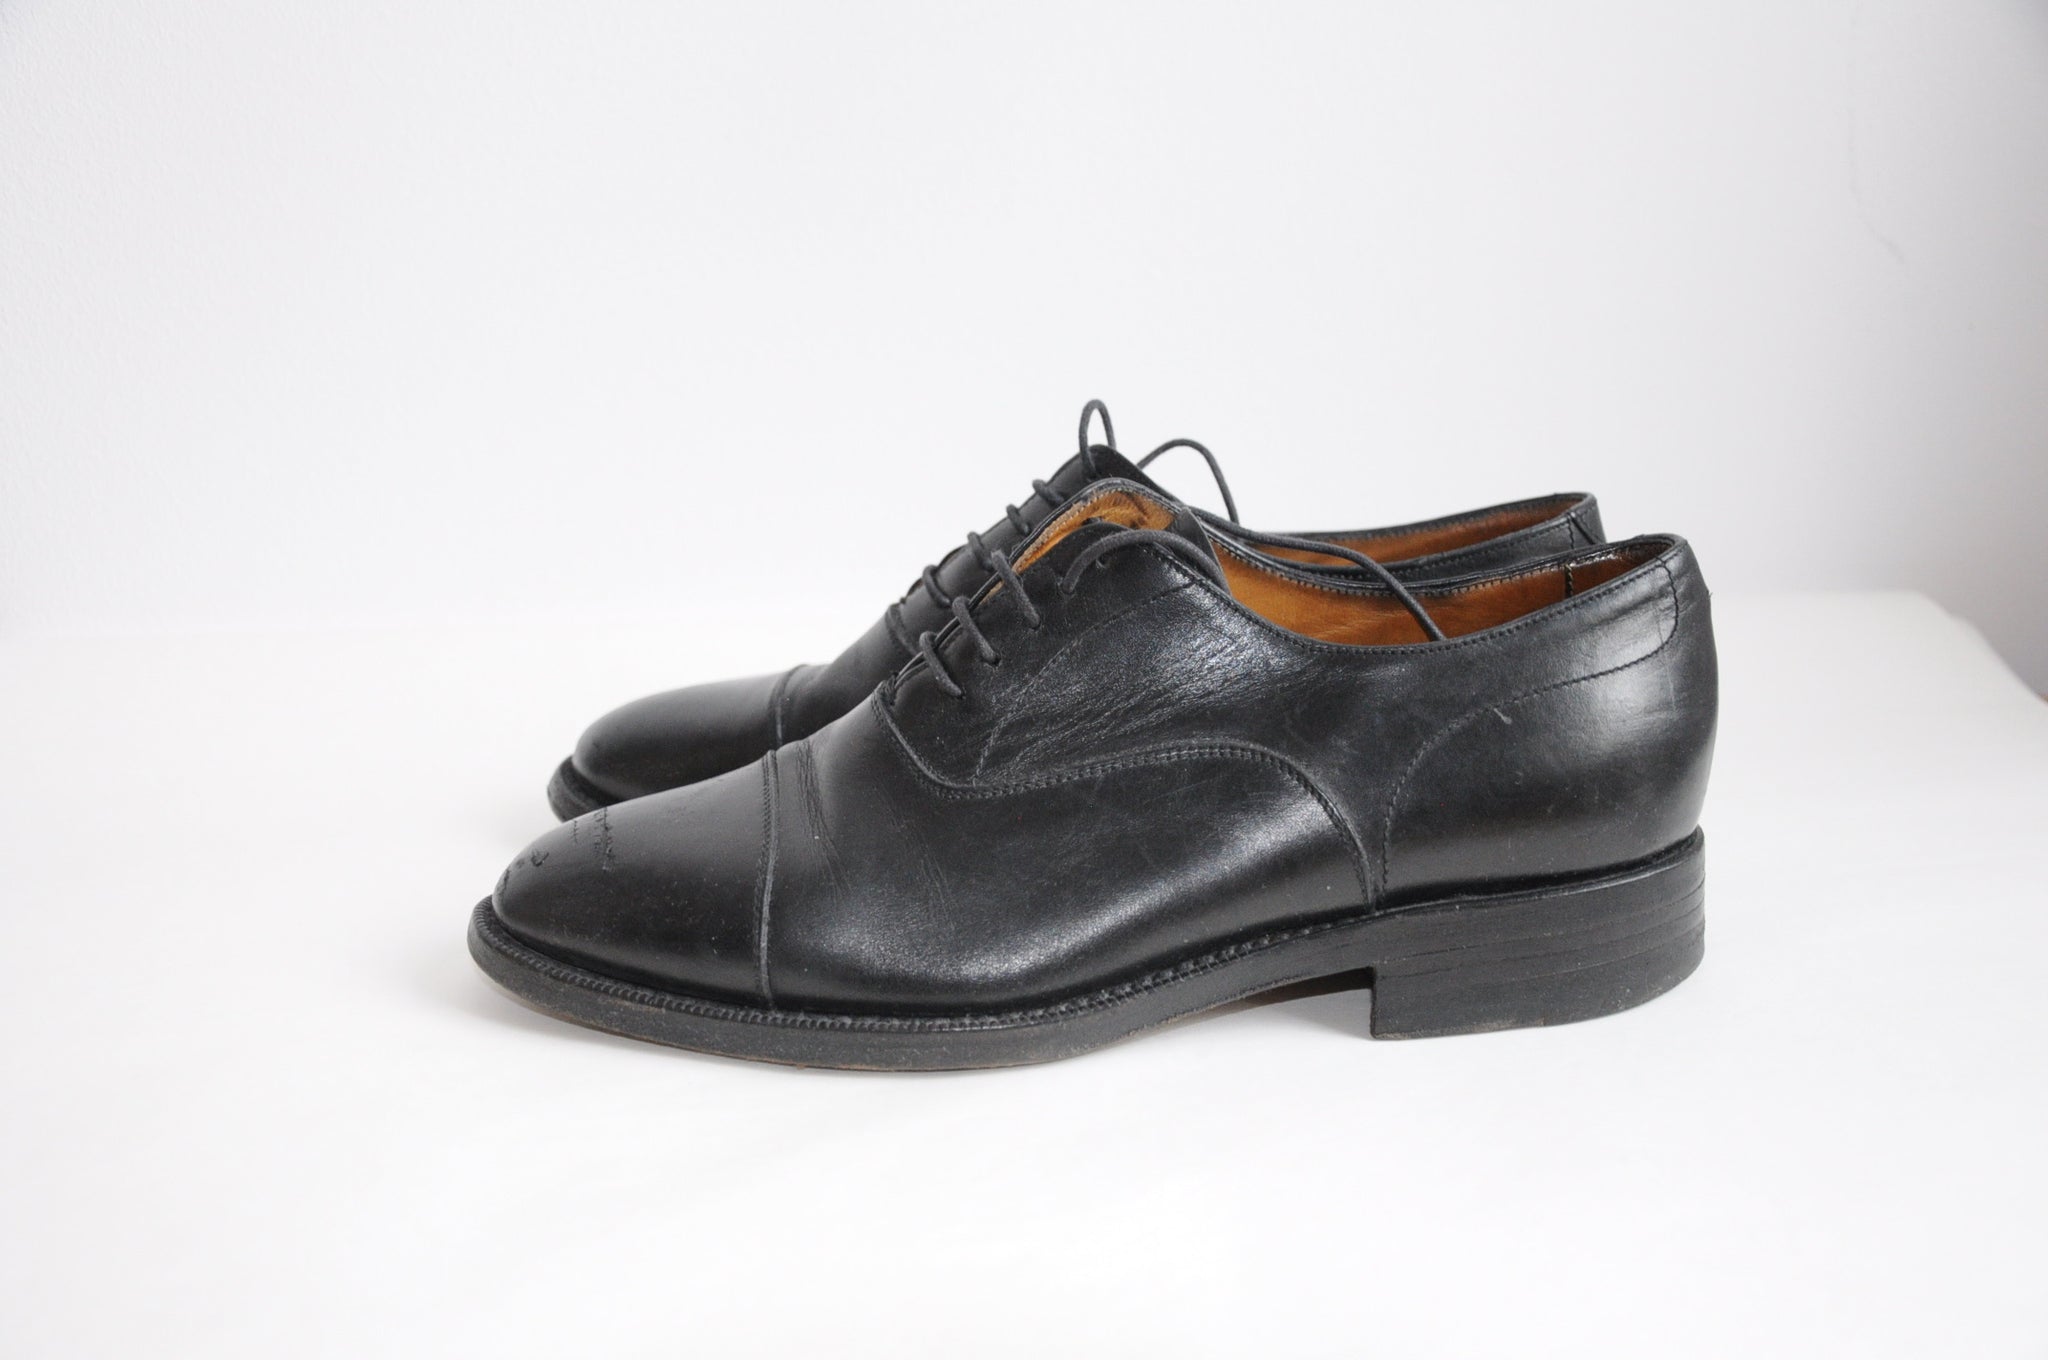 Oxford leather shoes / EU 37